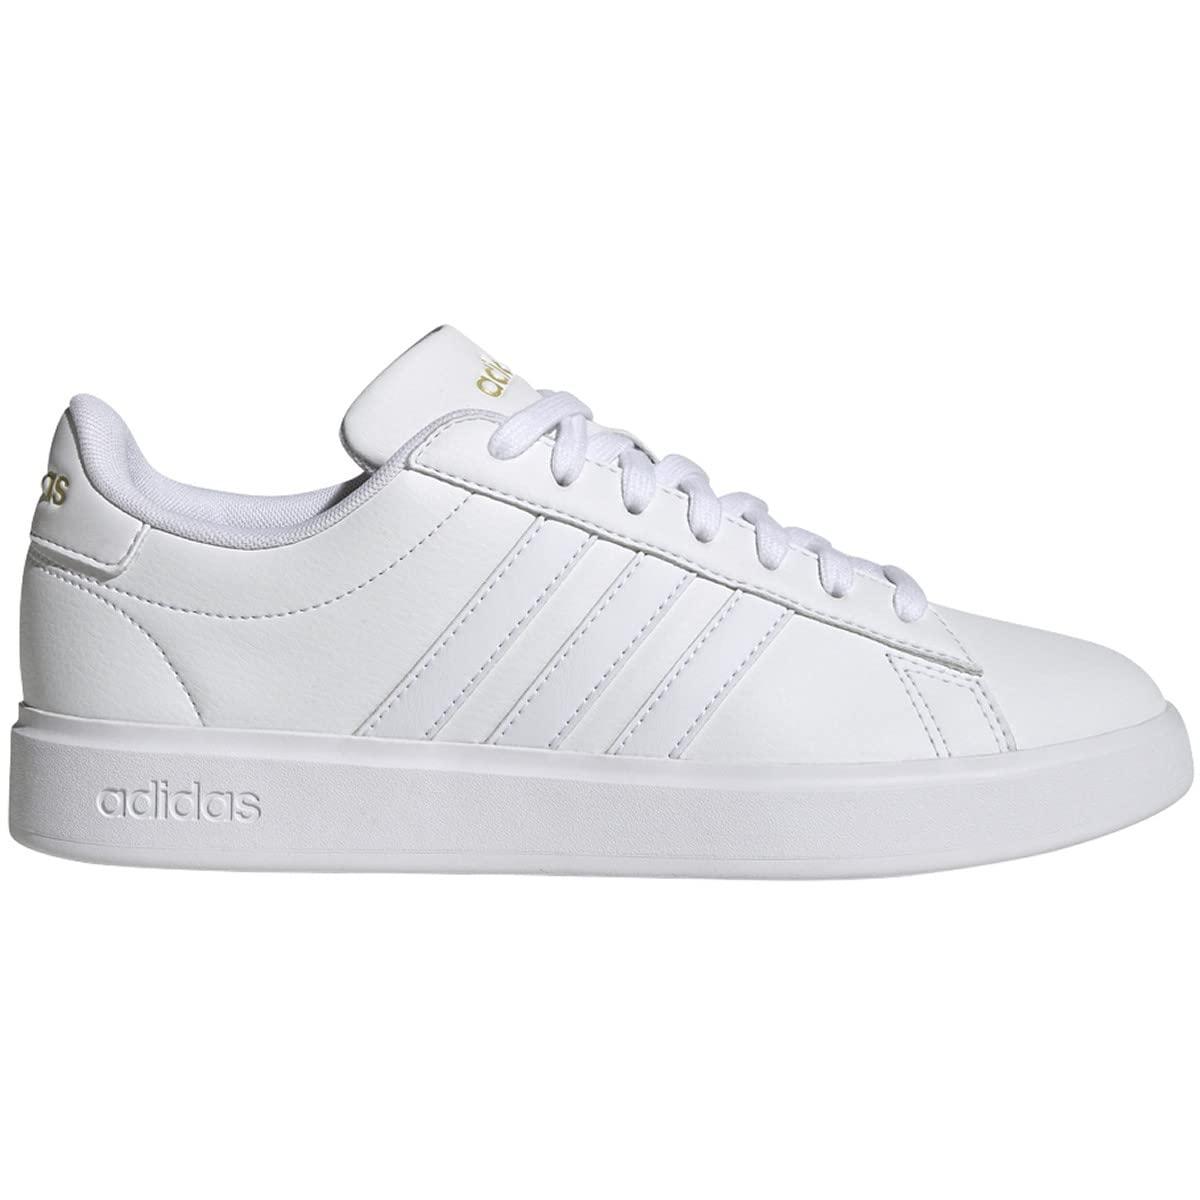 adidas Grand Court 2.0 Tennis Shoe in White | Lyst